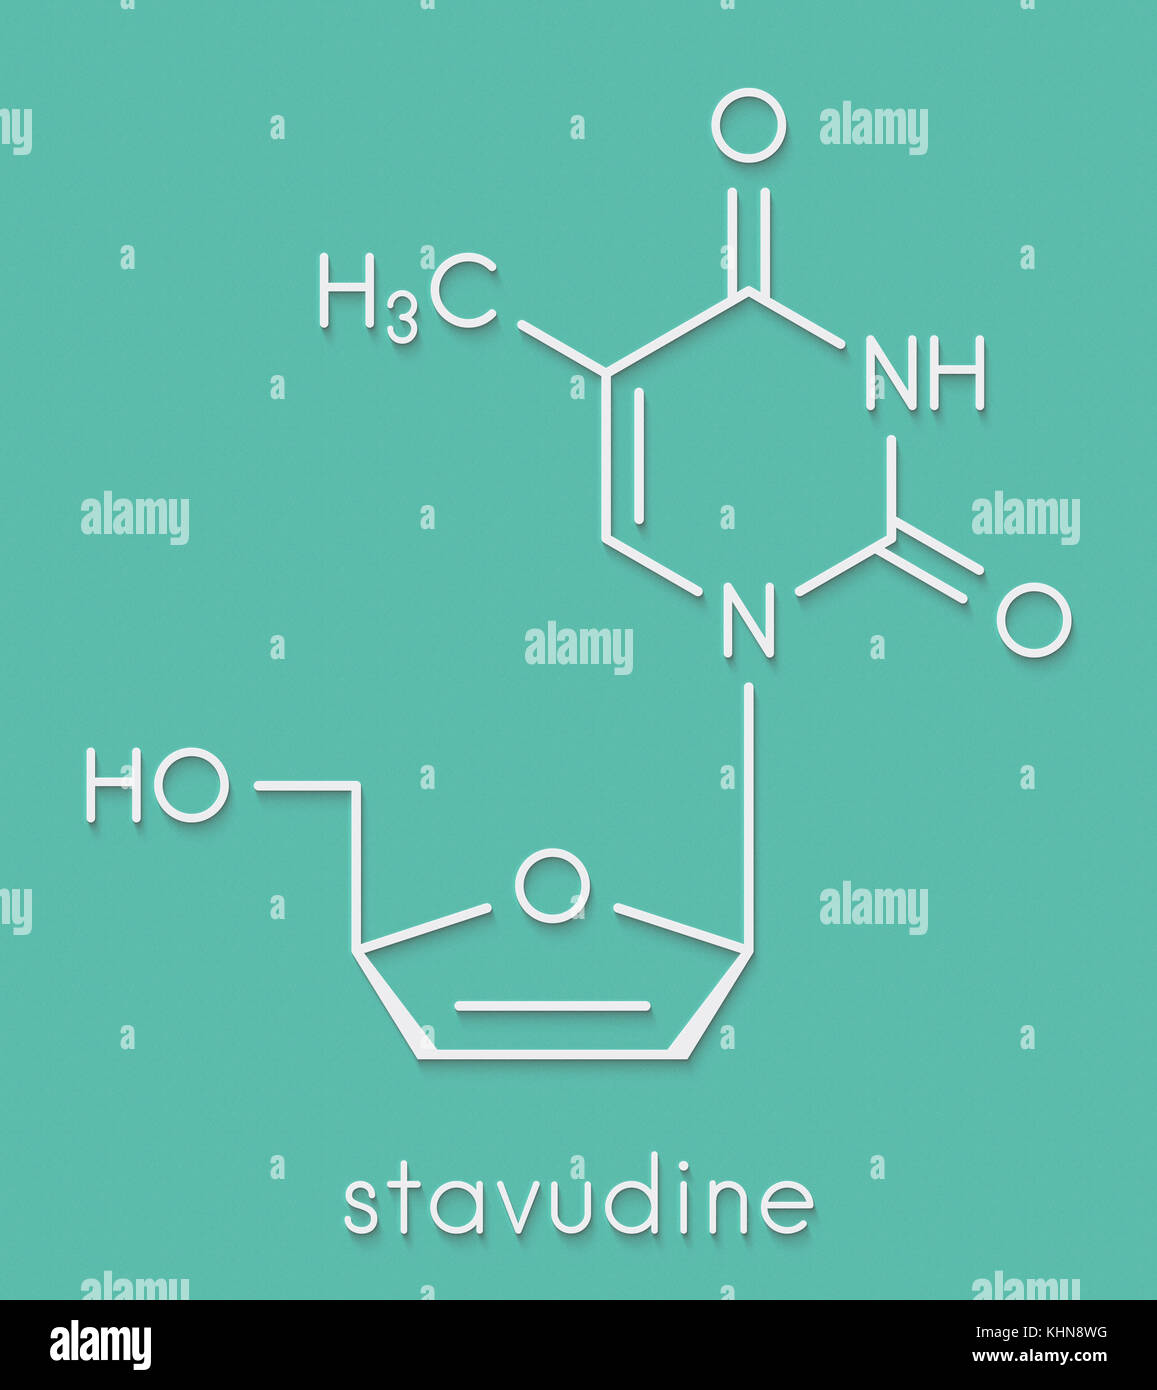 https://c8.alamy.com/comp/KHN8WG/stavudine-d4t-hiv-drug-molecule-thymidine-analog-that-blocks-reverse-KHN8WG.jpg